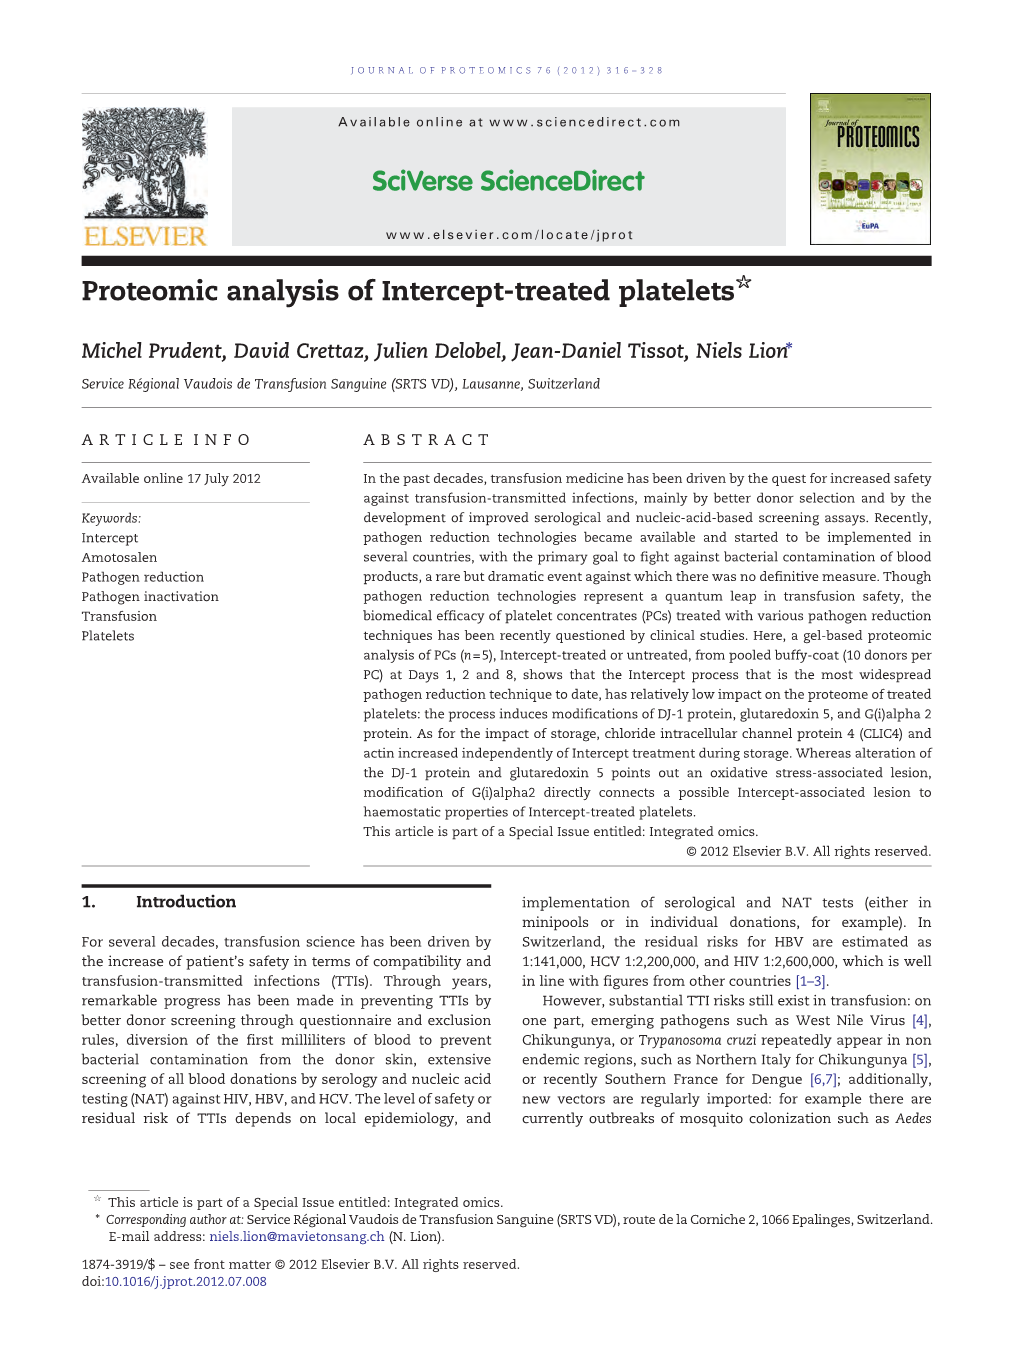 Proteomic Analysis of Intercept-Treated Platelets